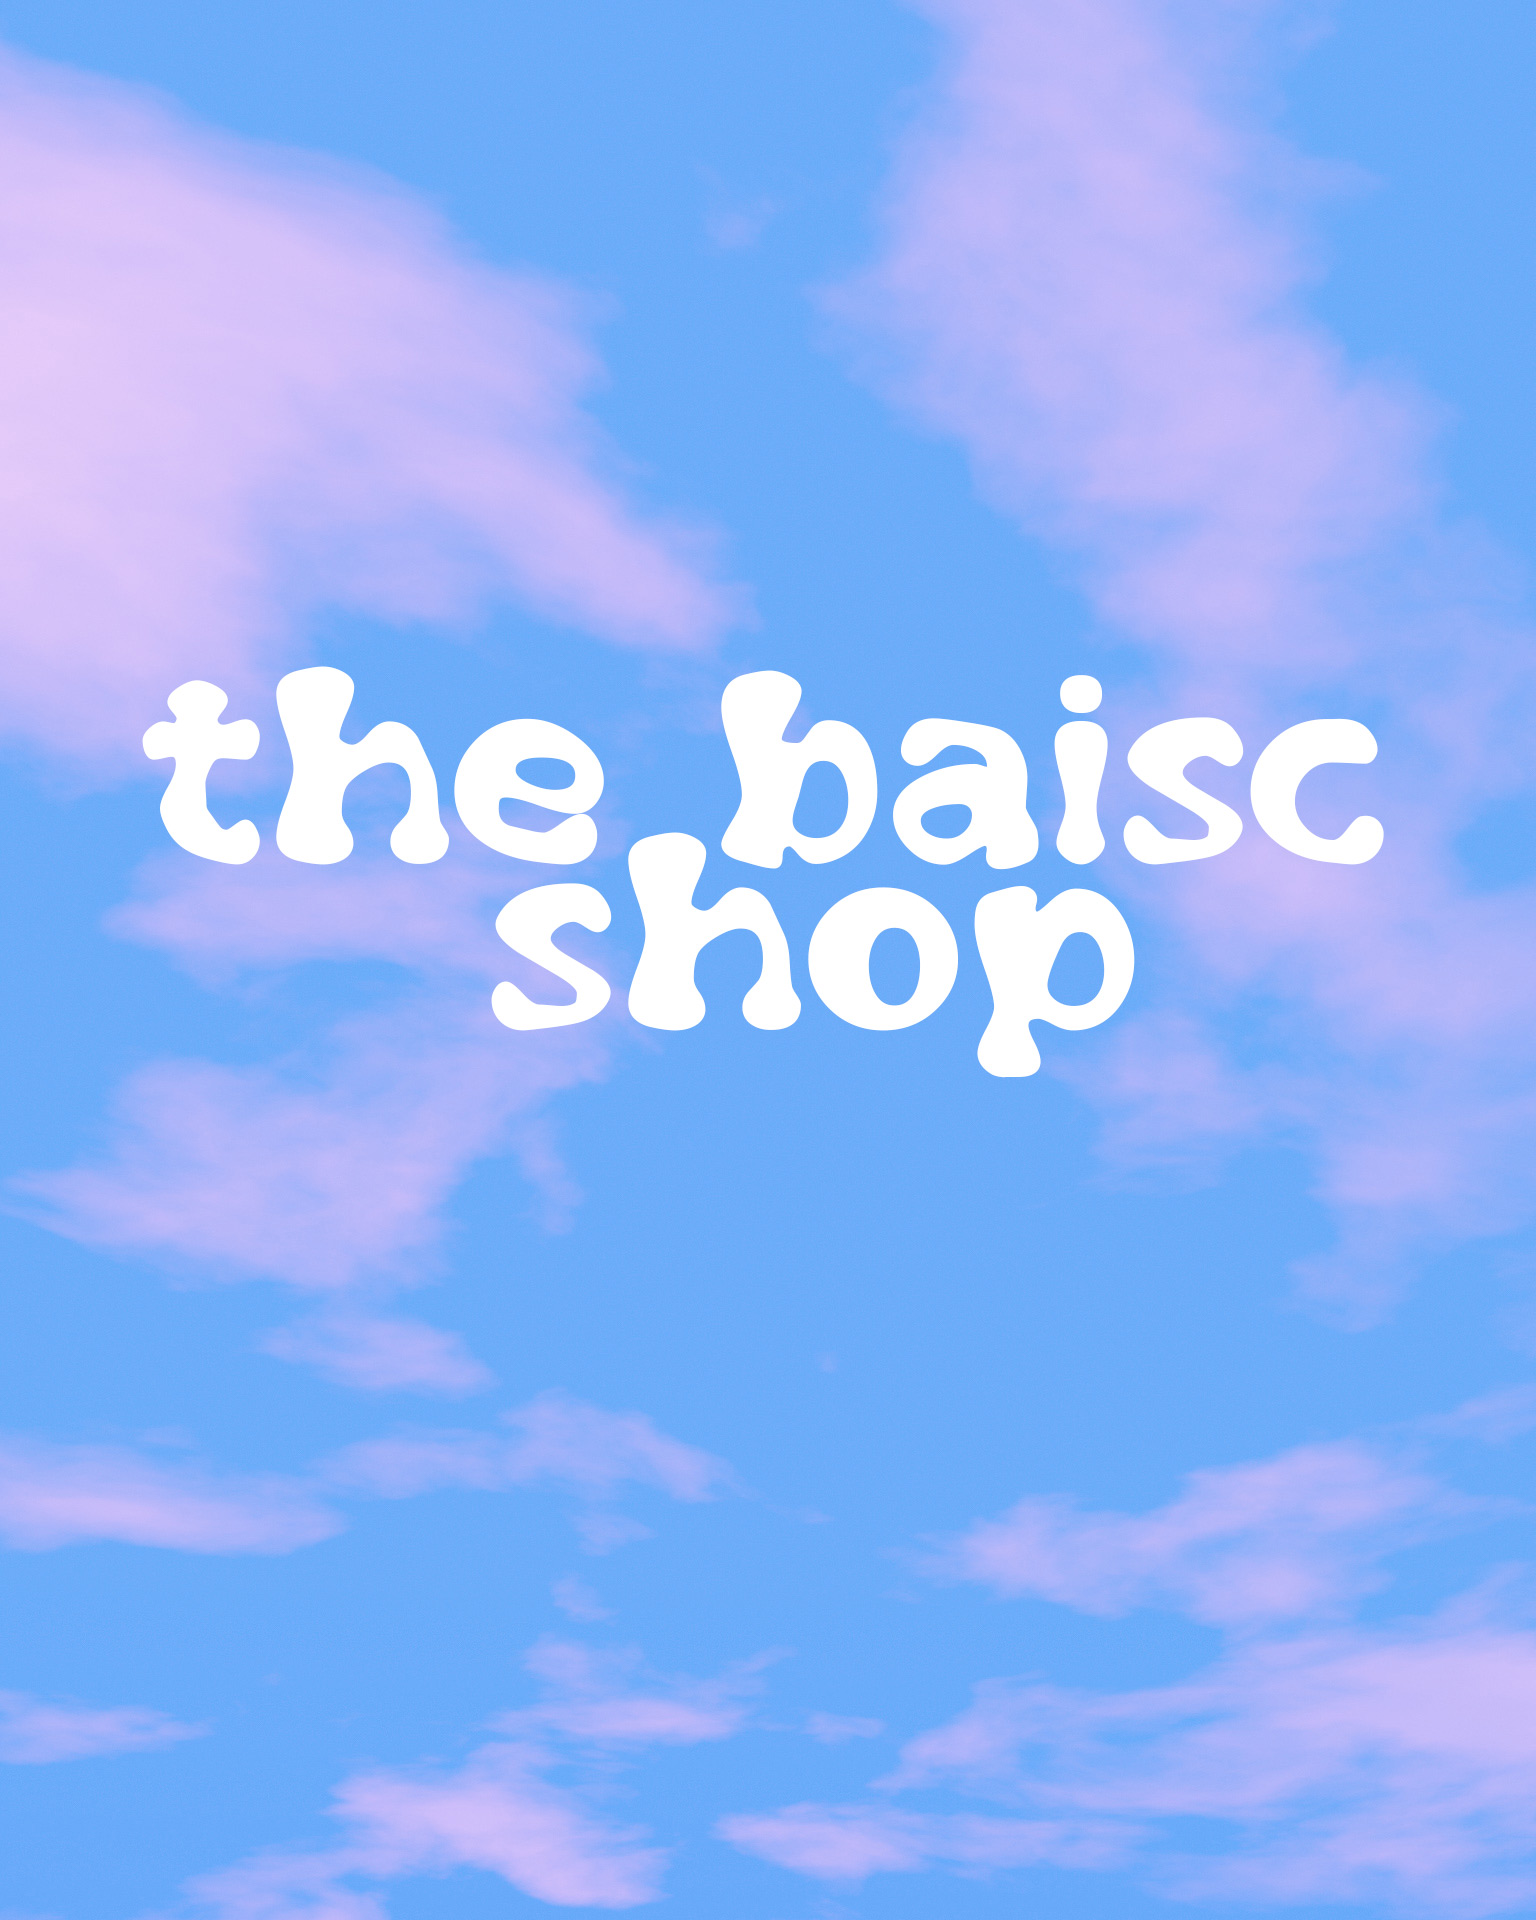 The Basic Shop